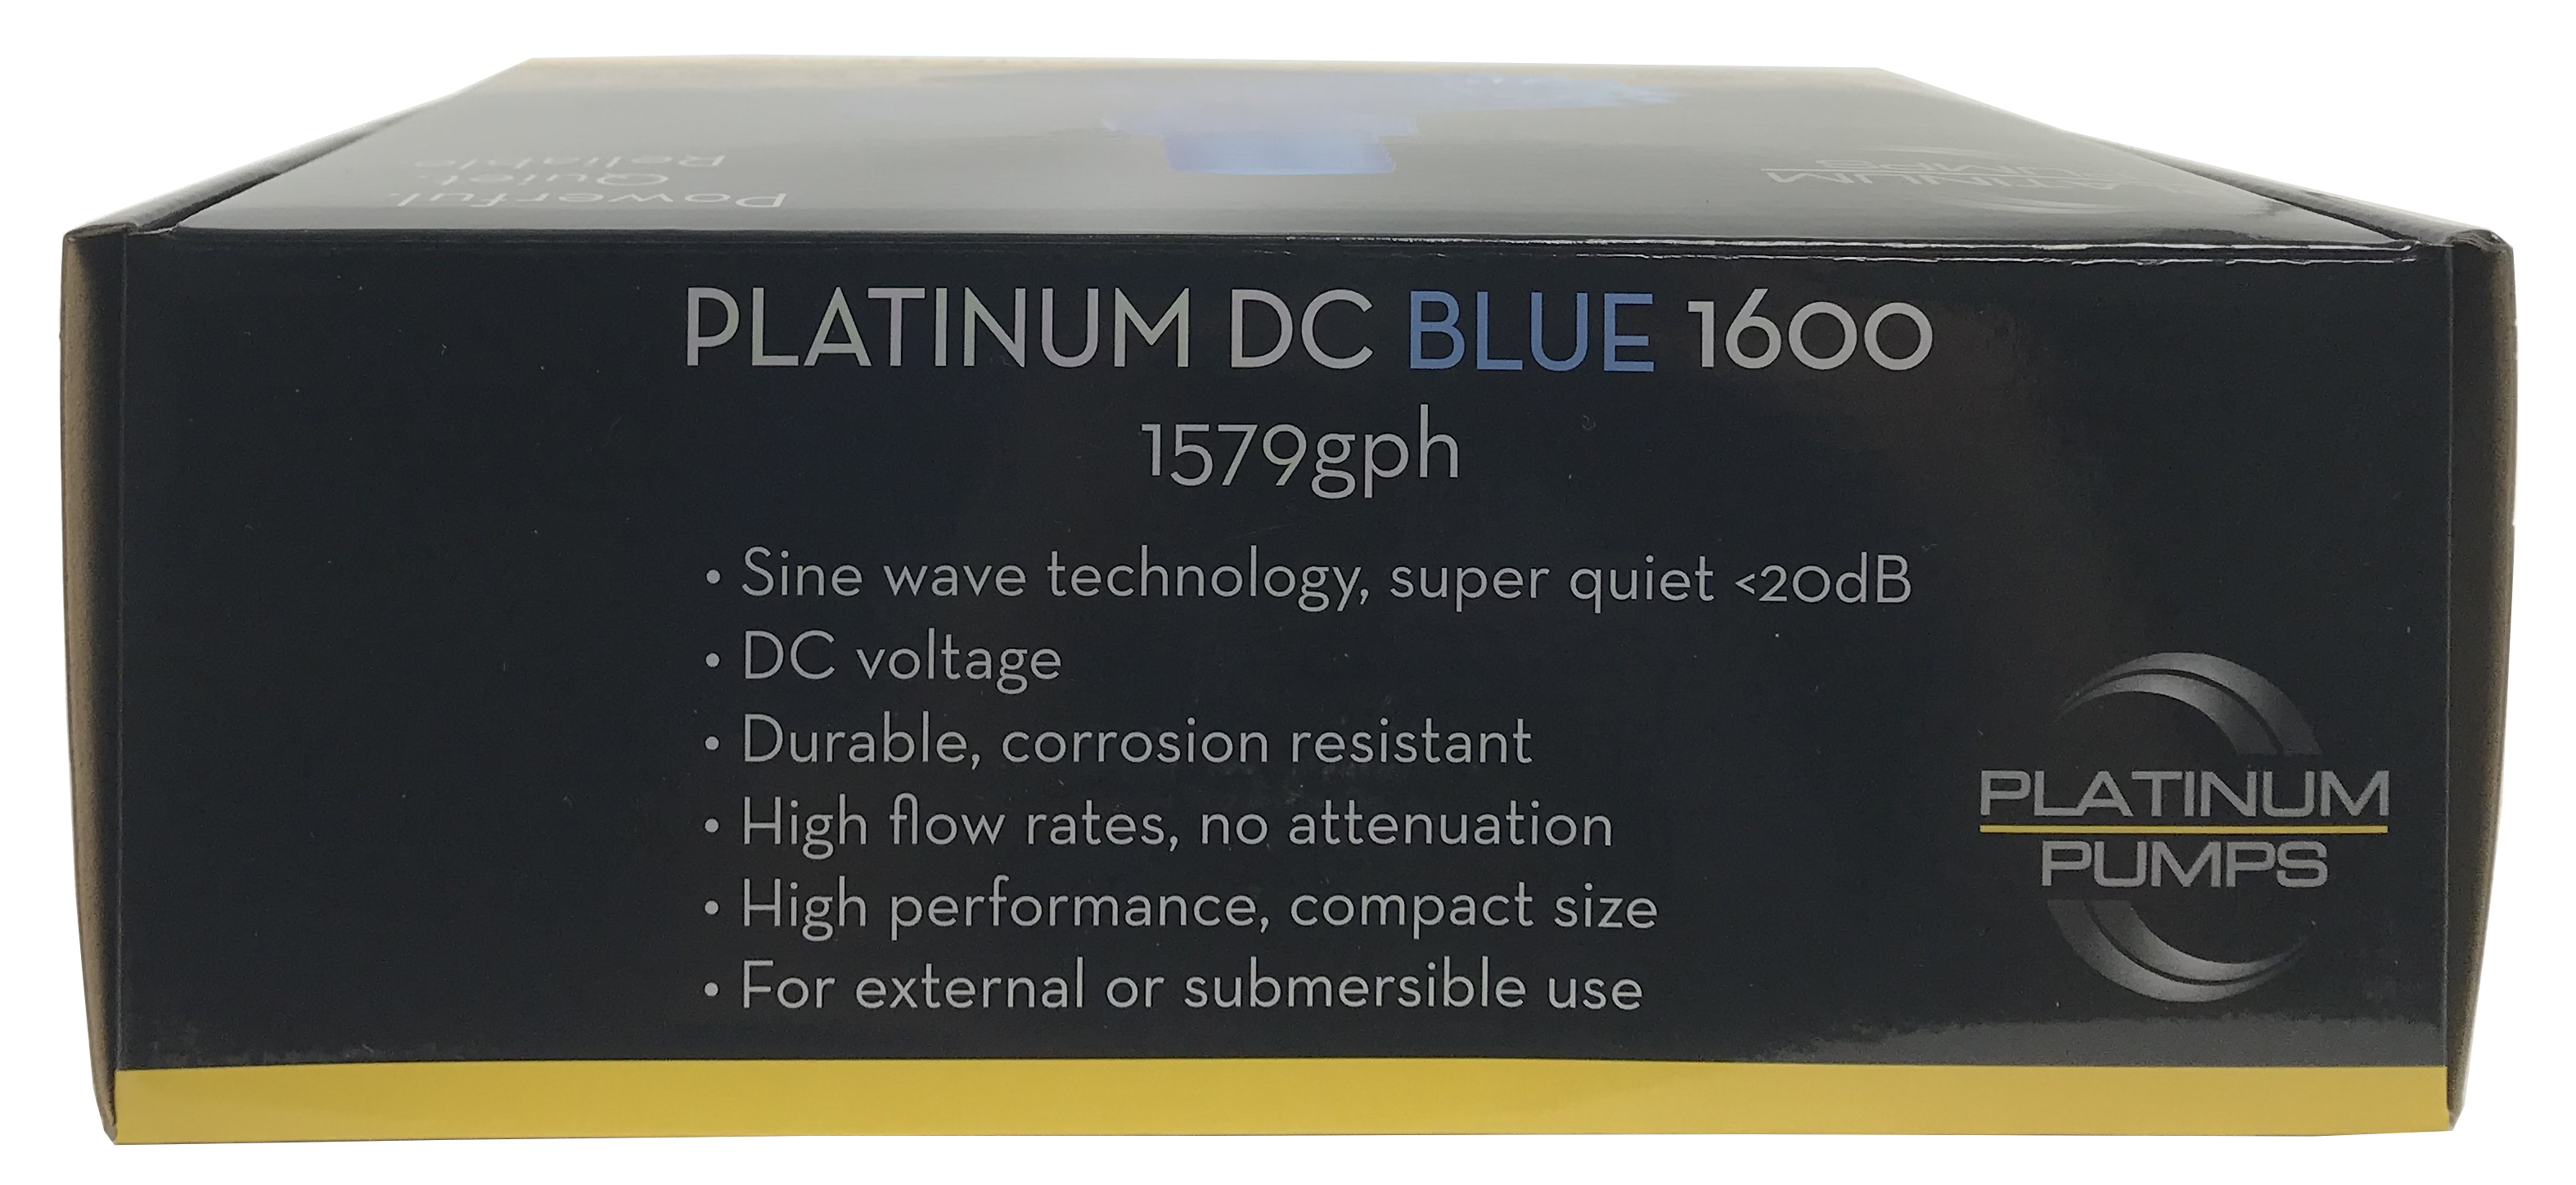 Platinum DC Blue 1600 Pump - 1579 gph